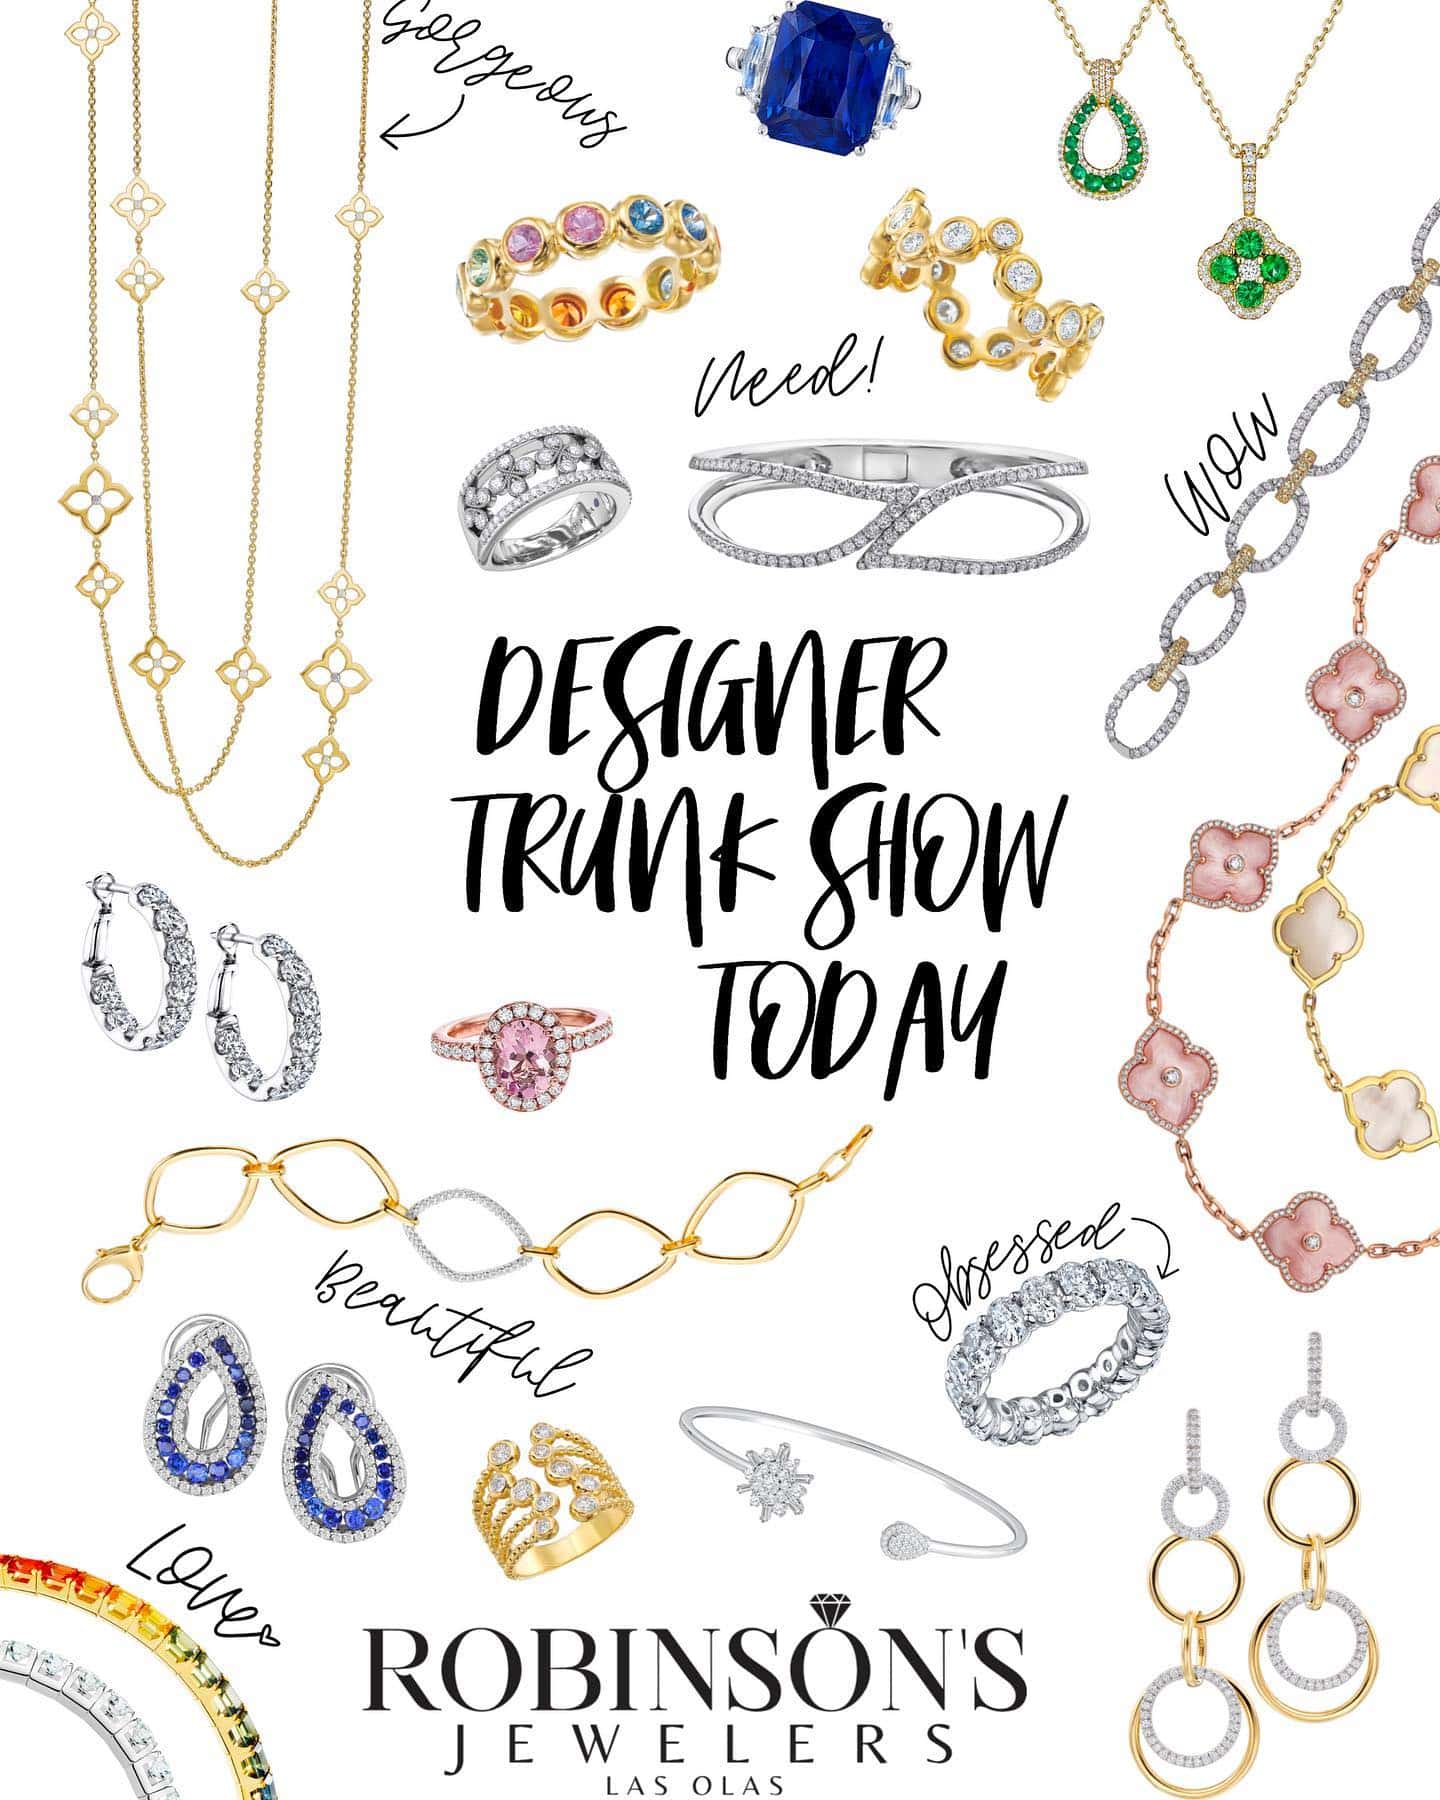 Robinson's Jewelers - Designer Trunk Show